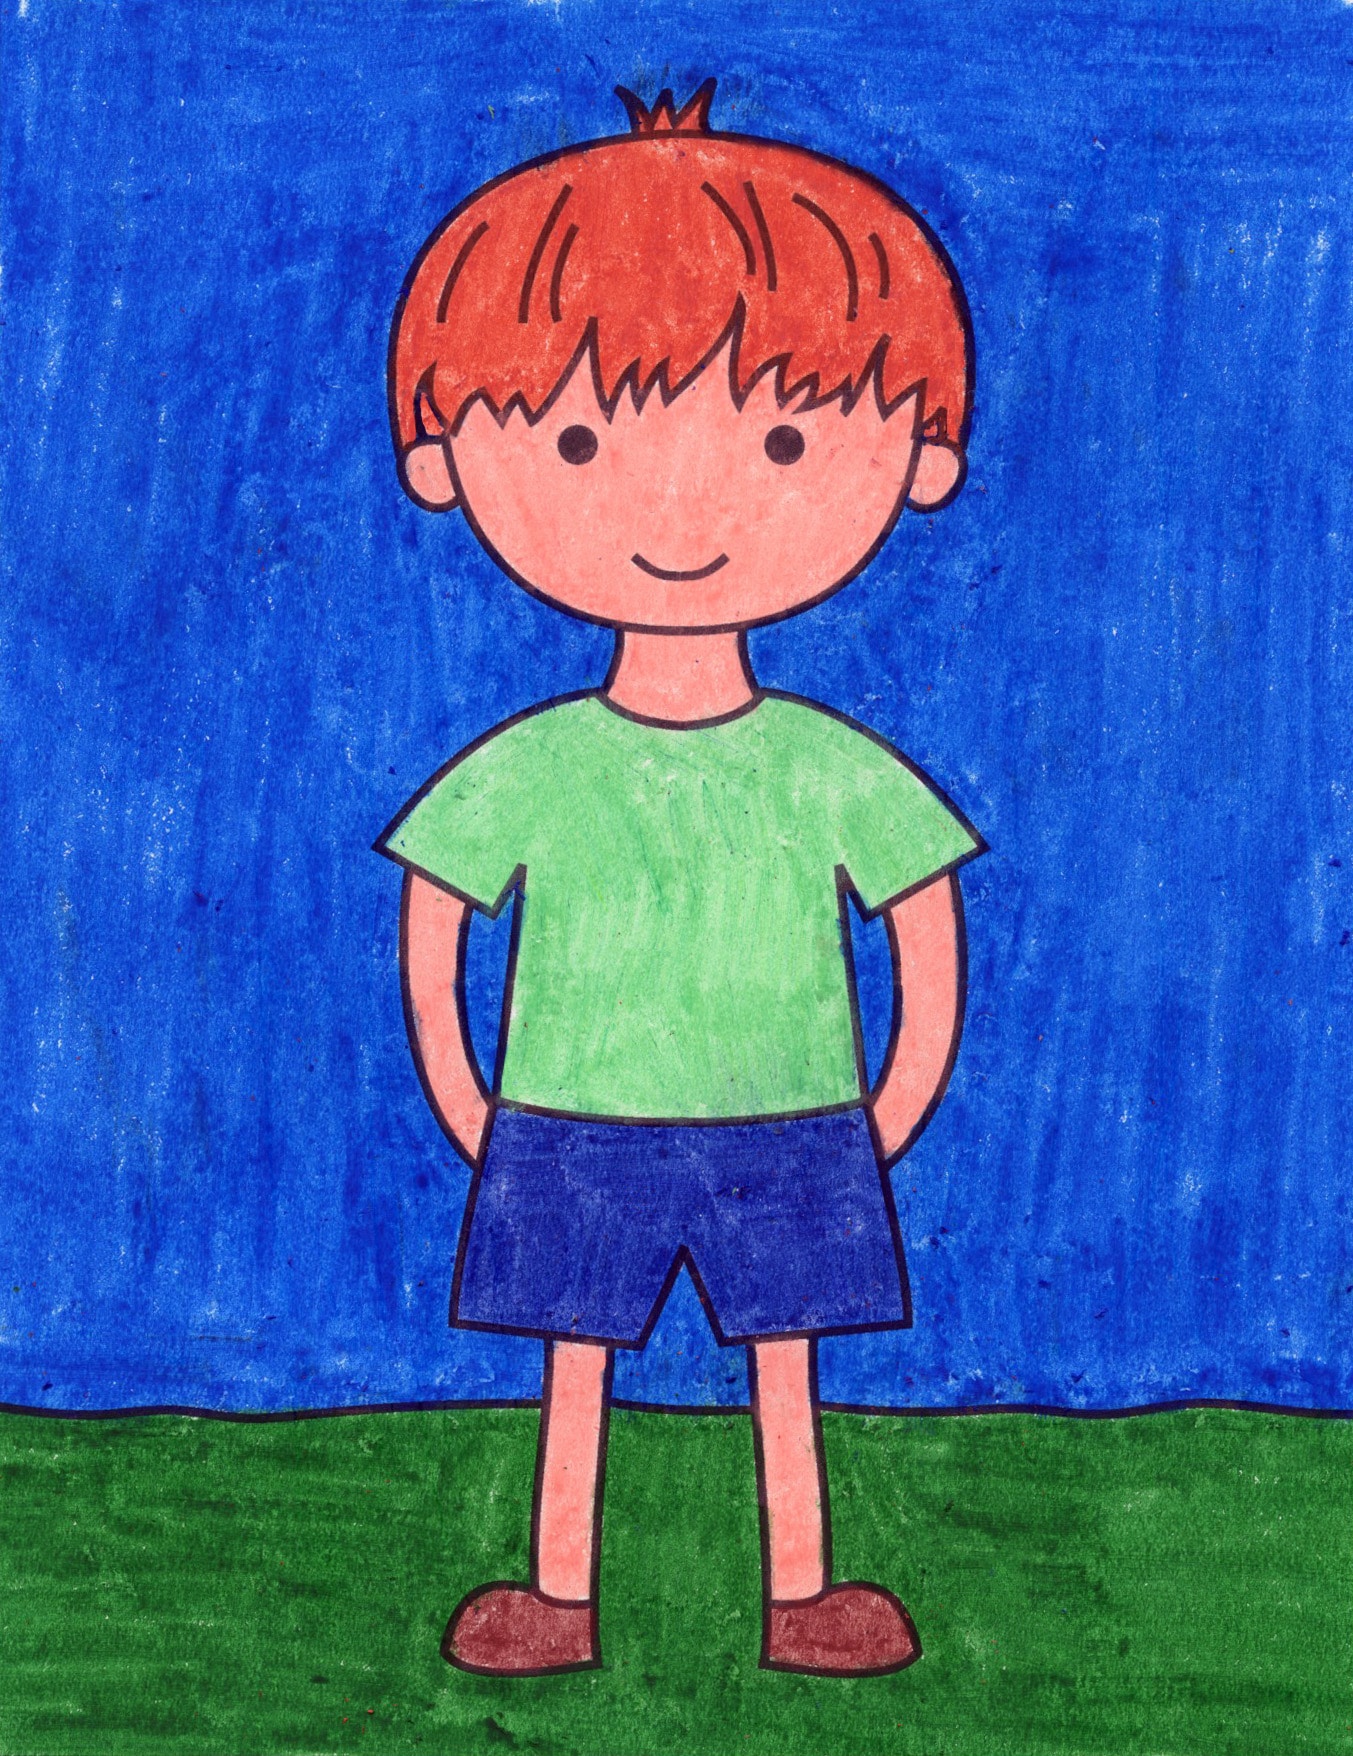 How To Draw A Boy In Shorts Art Projects For Kids Shutterstock koleksiyonunda hd kalitesinde uncomfortable boy standing side view character temali stok goerseller ve milyonlarca başka telifsiz stok fotograf, illuestrasyon ve vektoer bulabilirsiniz. how to draw a boy in shorts art